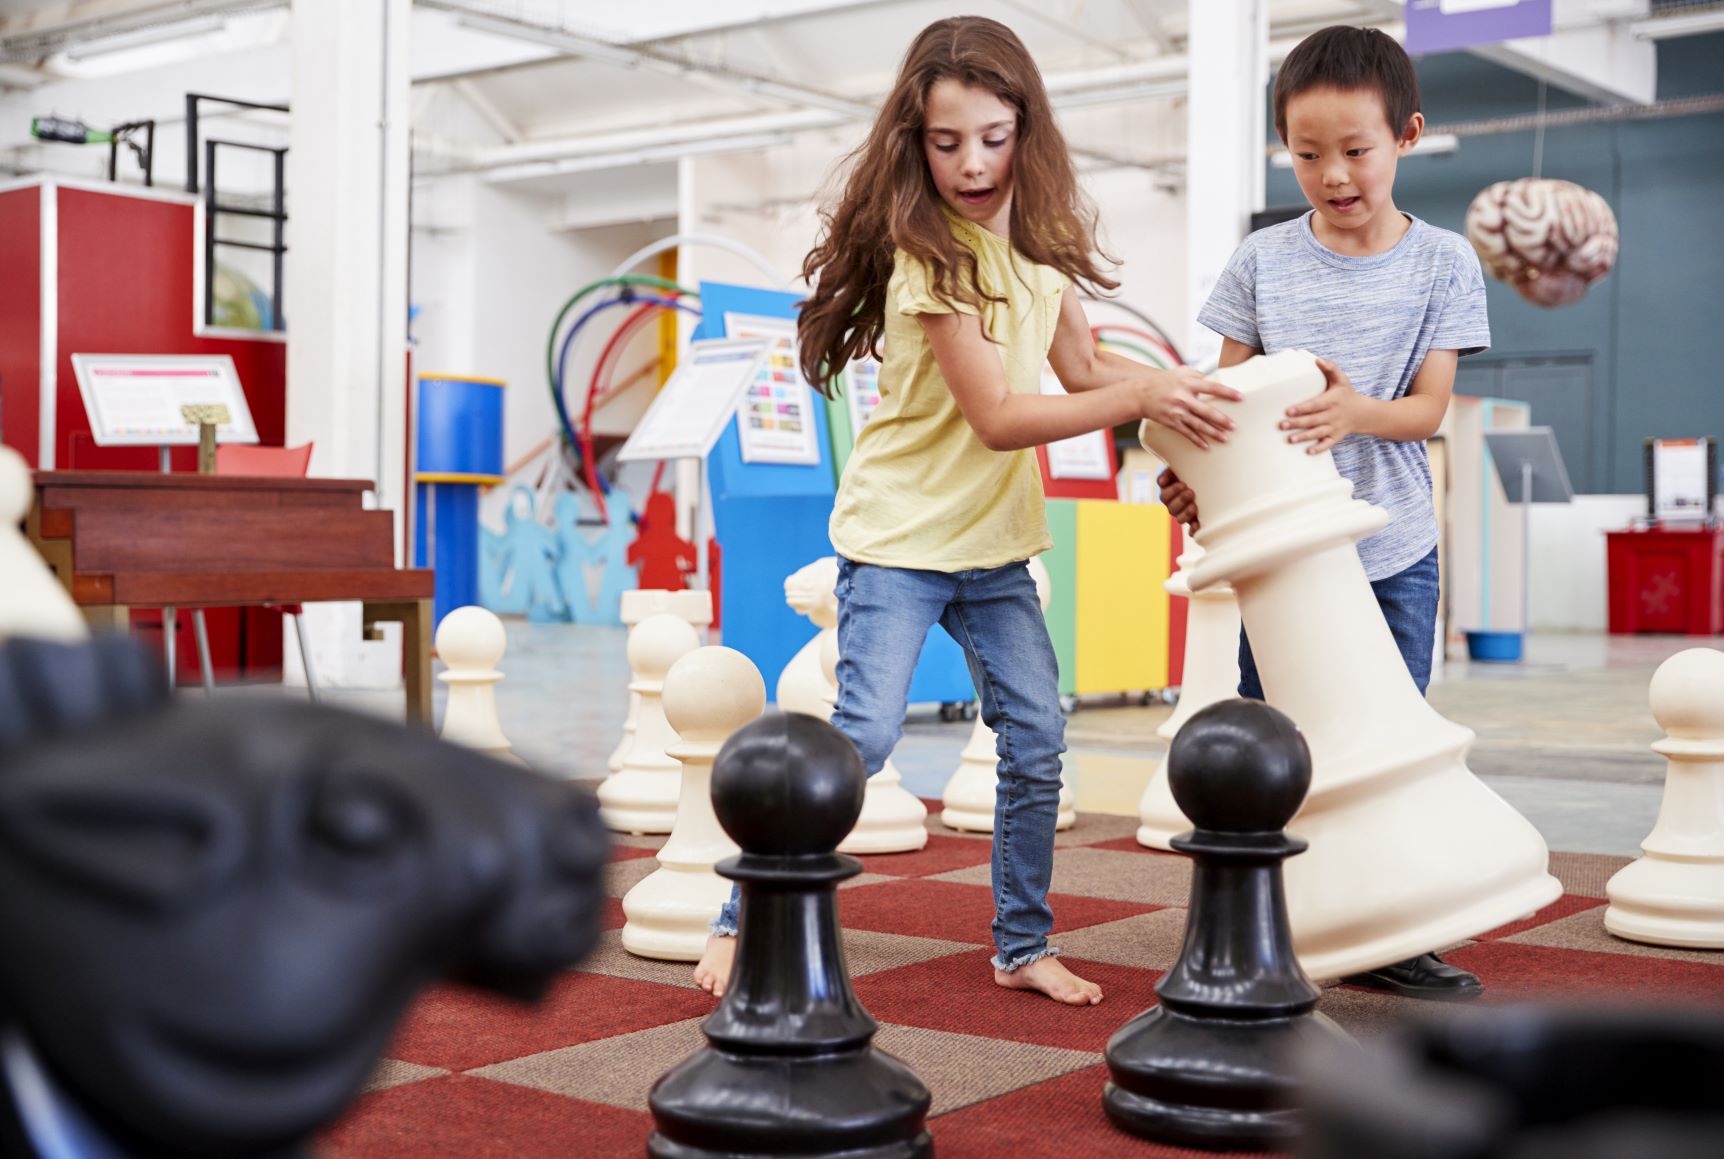 chess programs in schools